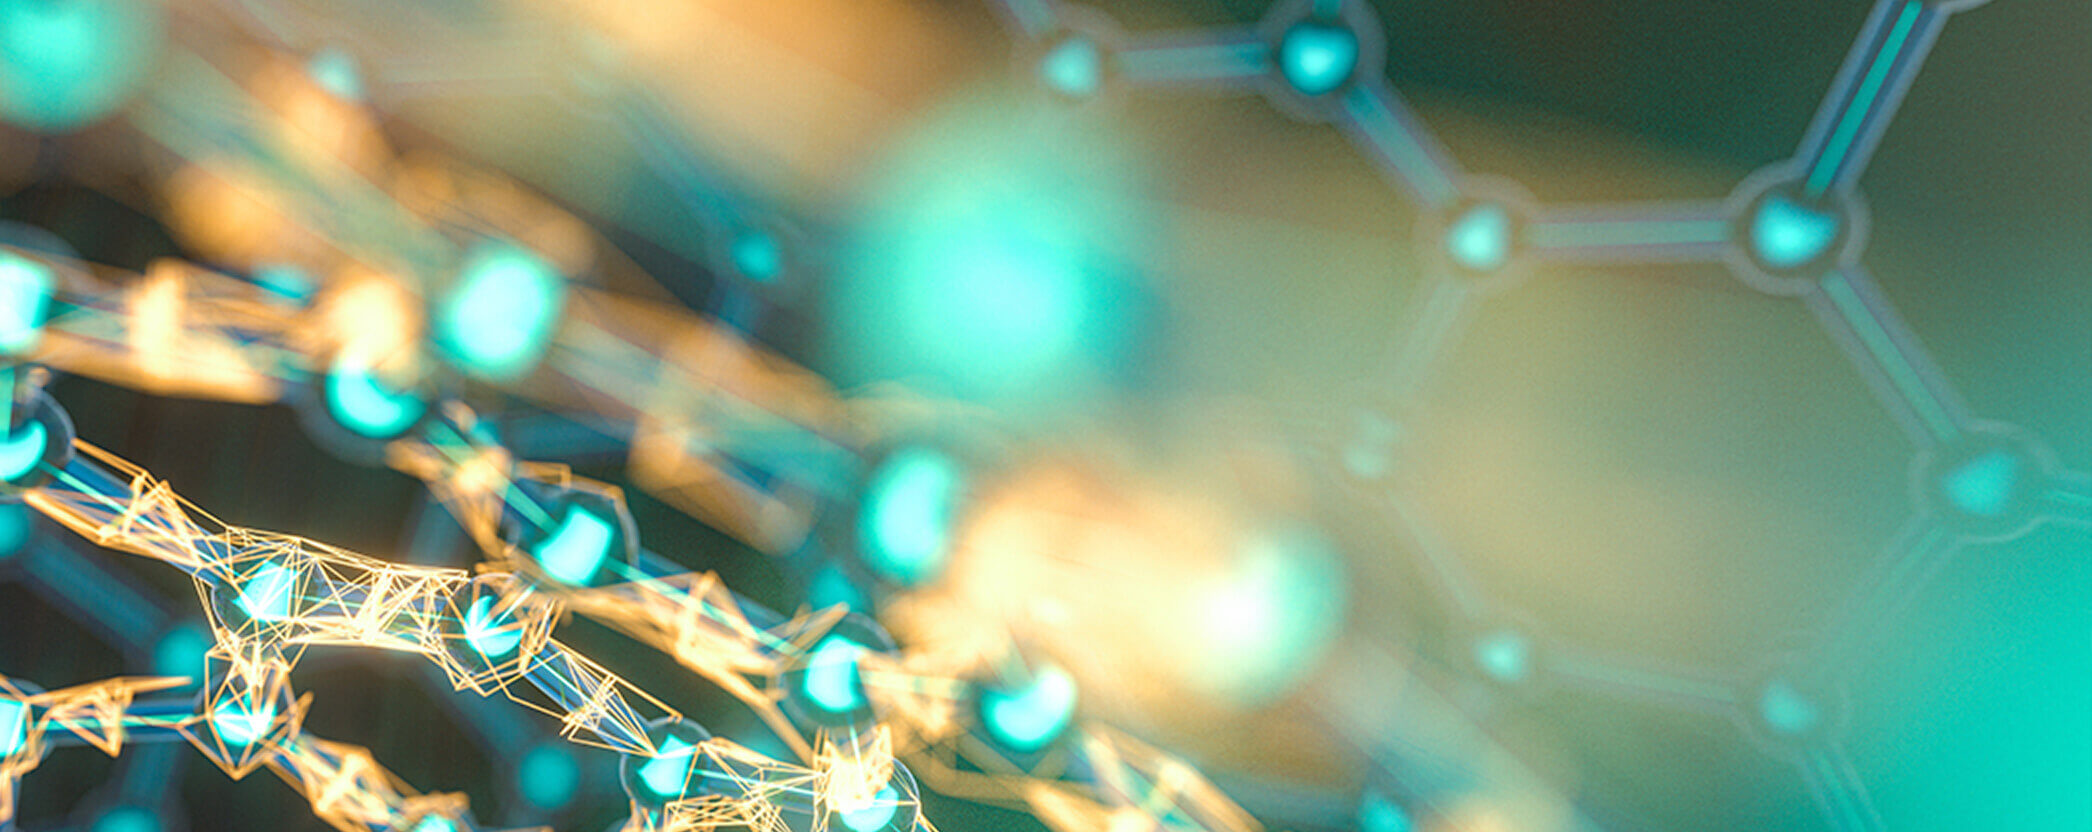 Nanotechnology abstract image